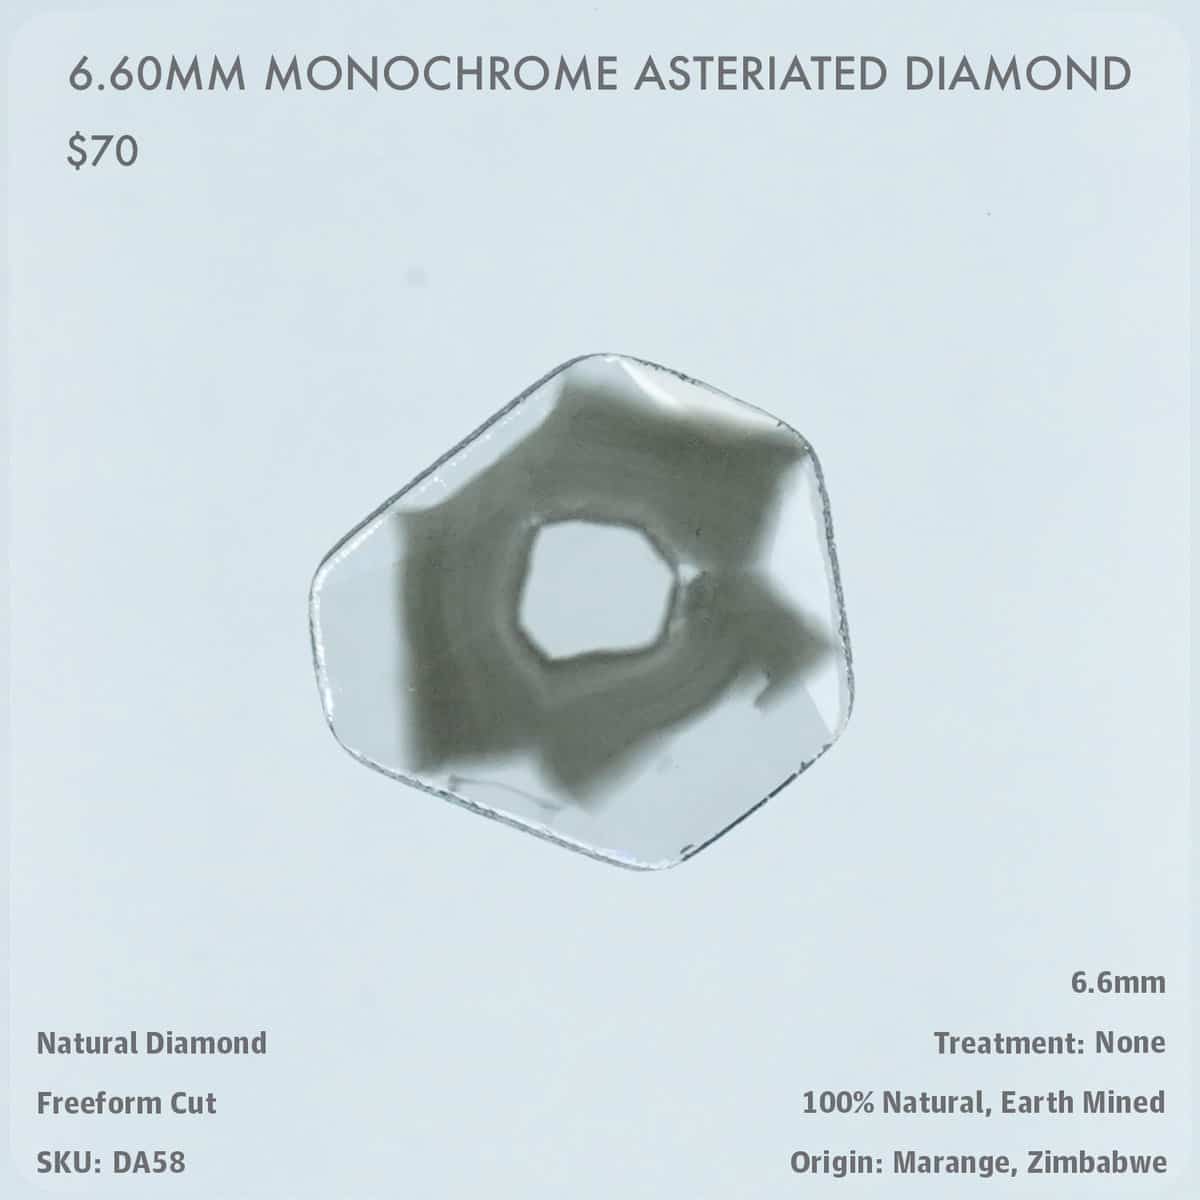 6.60mm Monochrome Asteriated Diamond